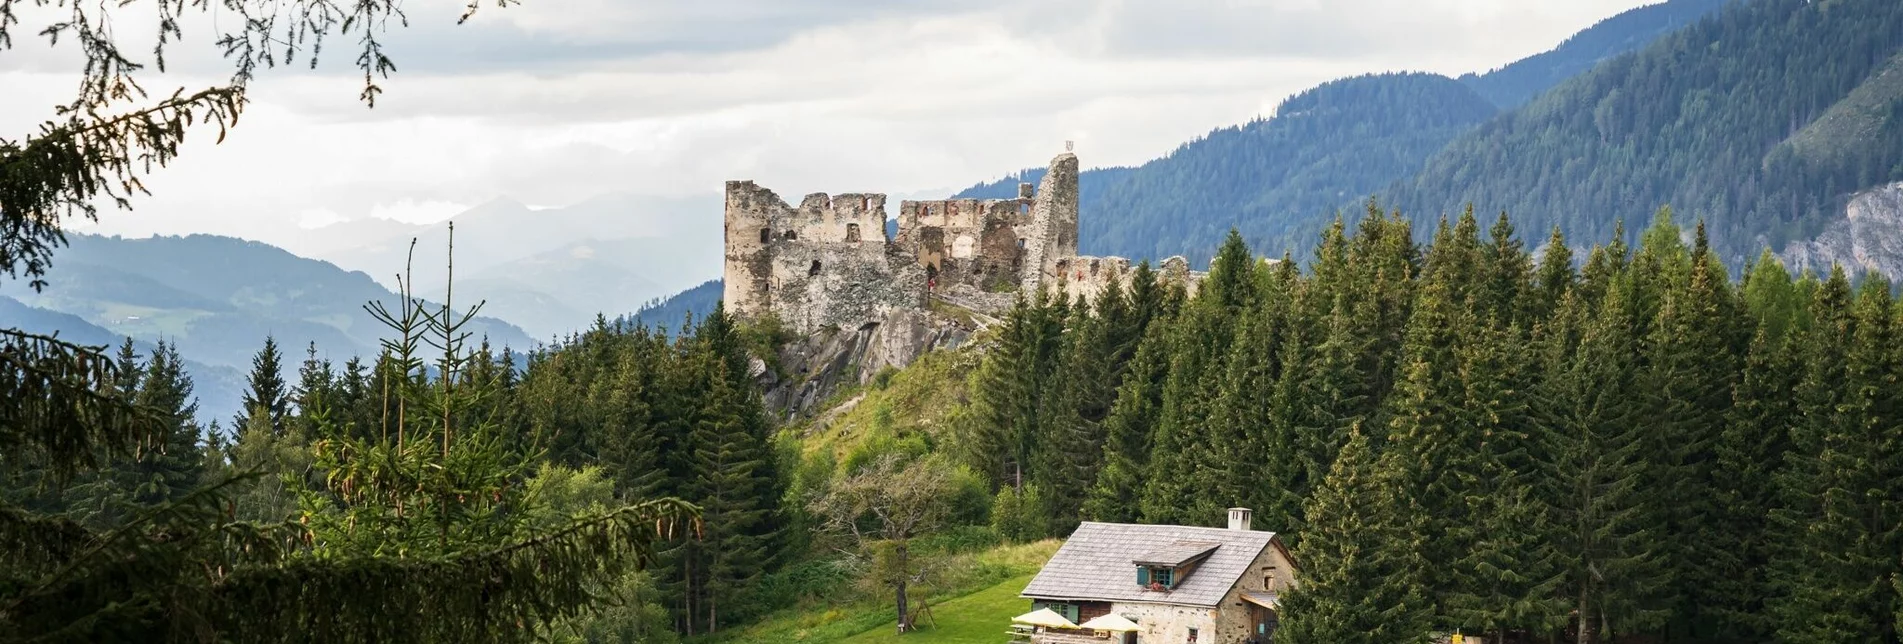 Wanderung Steinschloss Rundwanderweg - Touren-Impression #1 | © Tourismusverband Region Murau